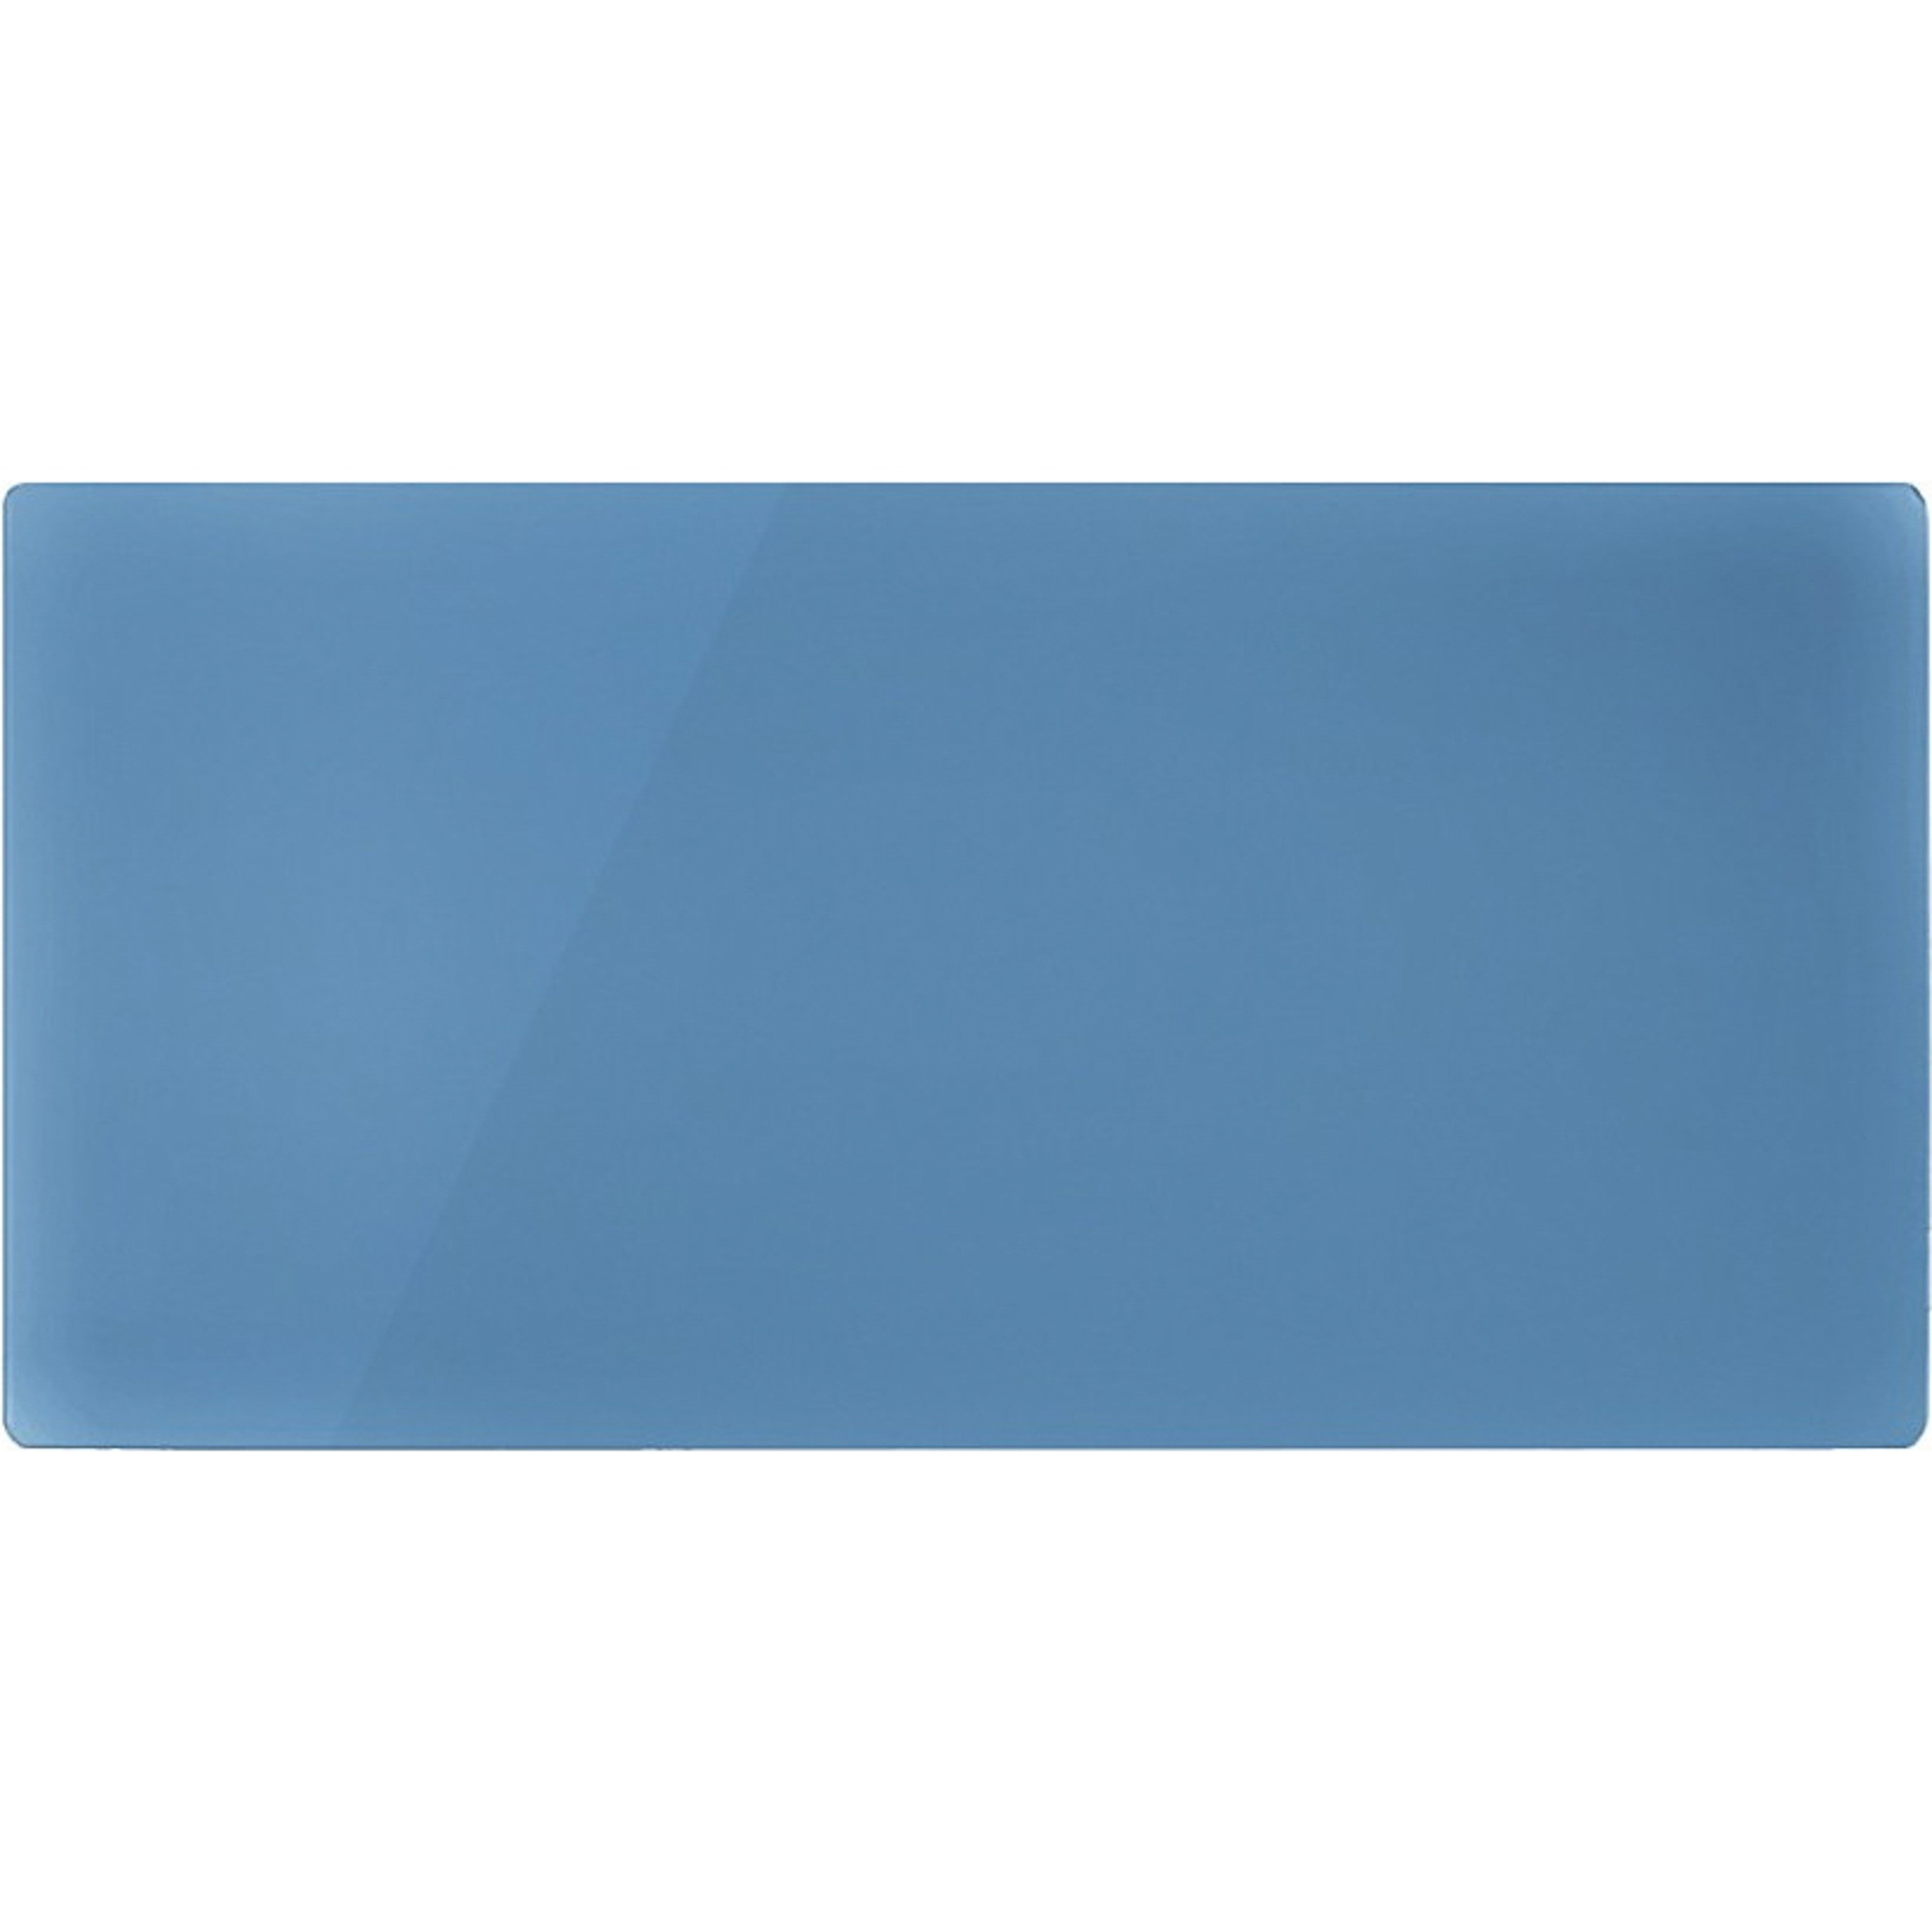 Декоративная панель Nobo NDG4 052 Retro Blue декоративные панели для серии oslo nobo ndg4062 retro blue